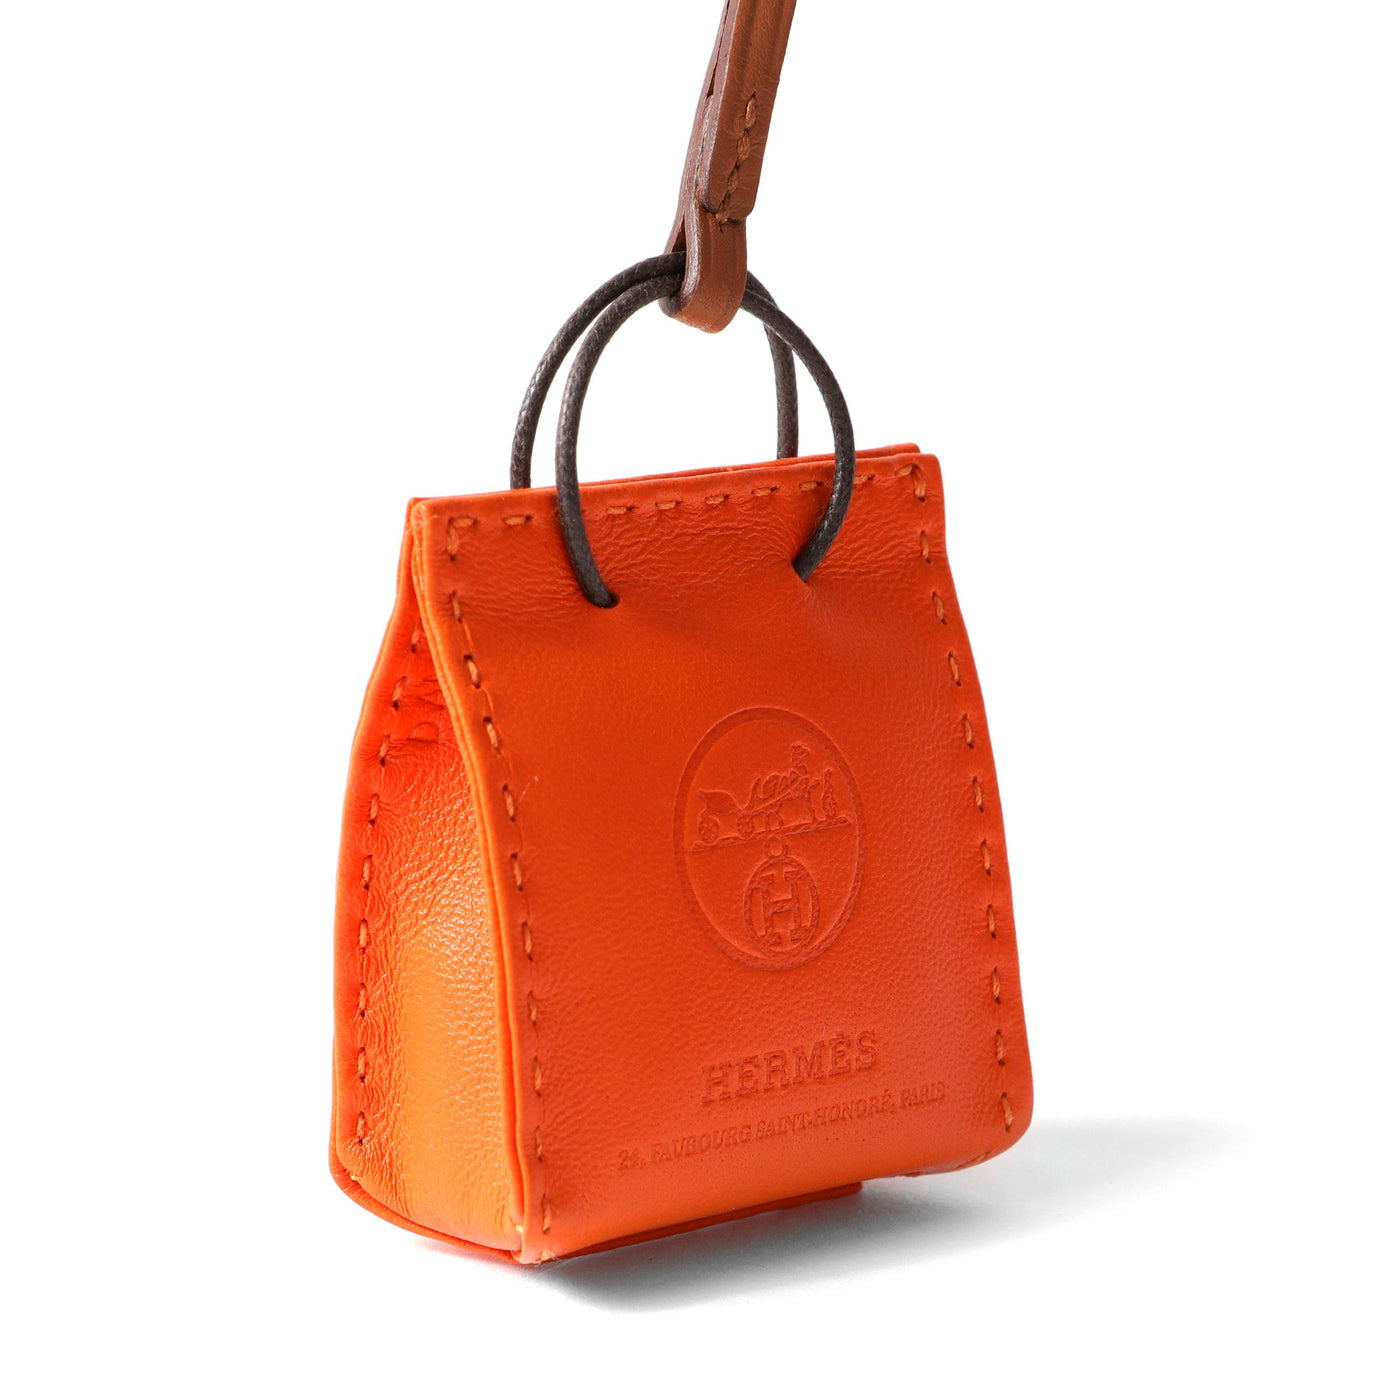 Hermès Orange Shopping Bag Charm 2